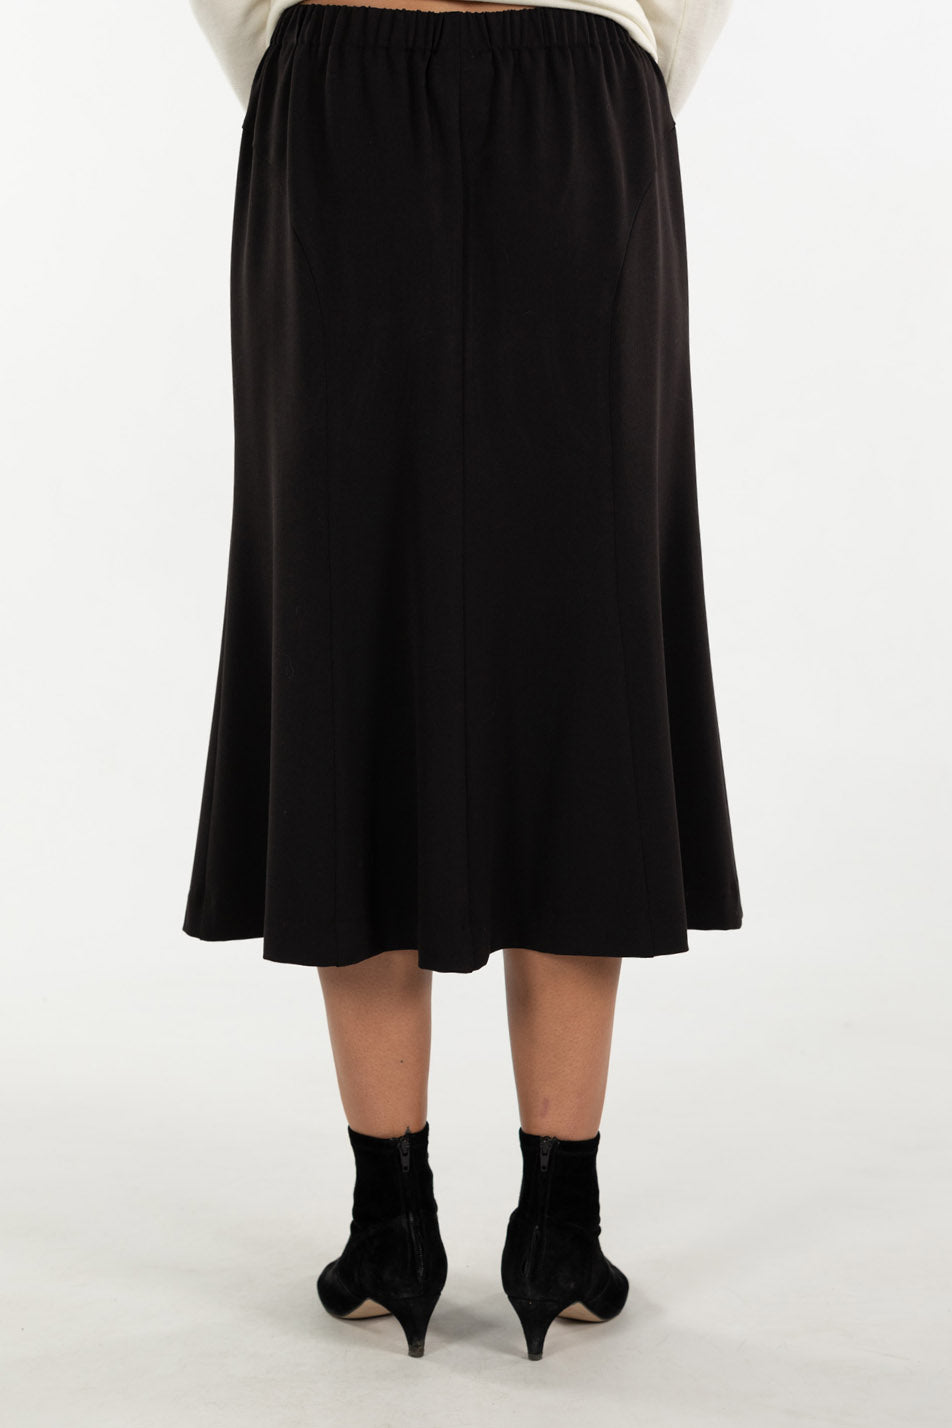 Shop Heidi Panel Skirt in Black – Fella Hamilton